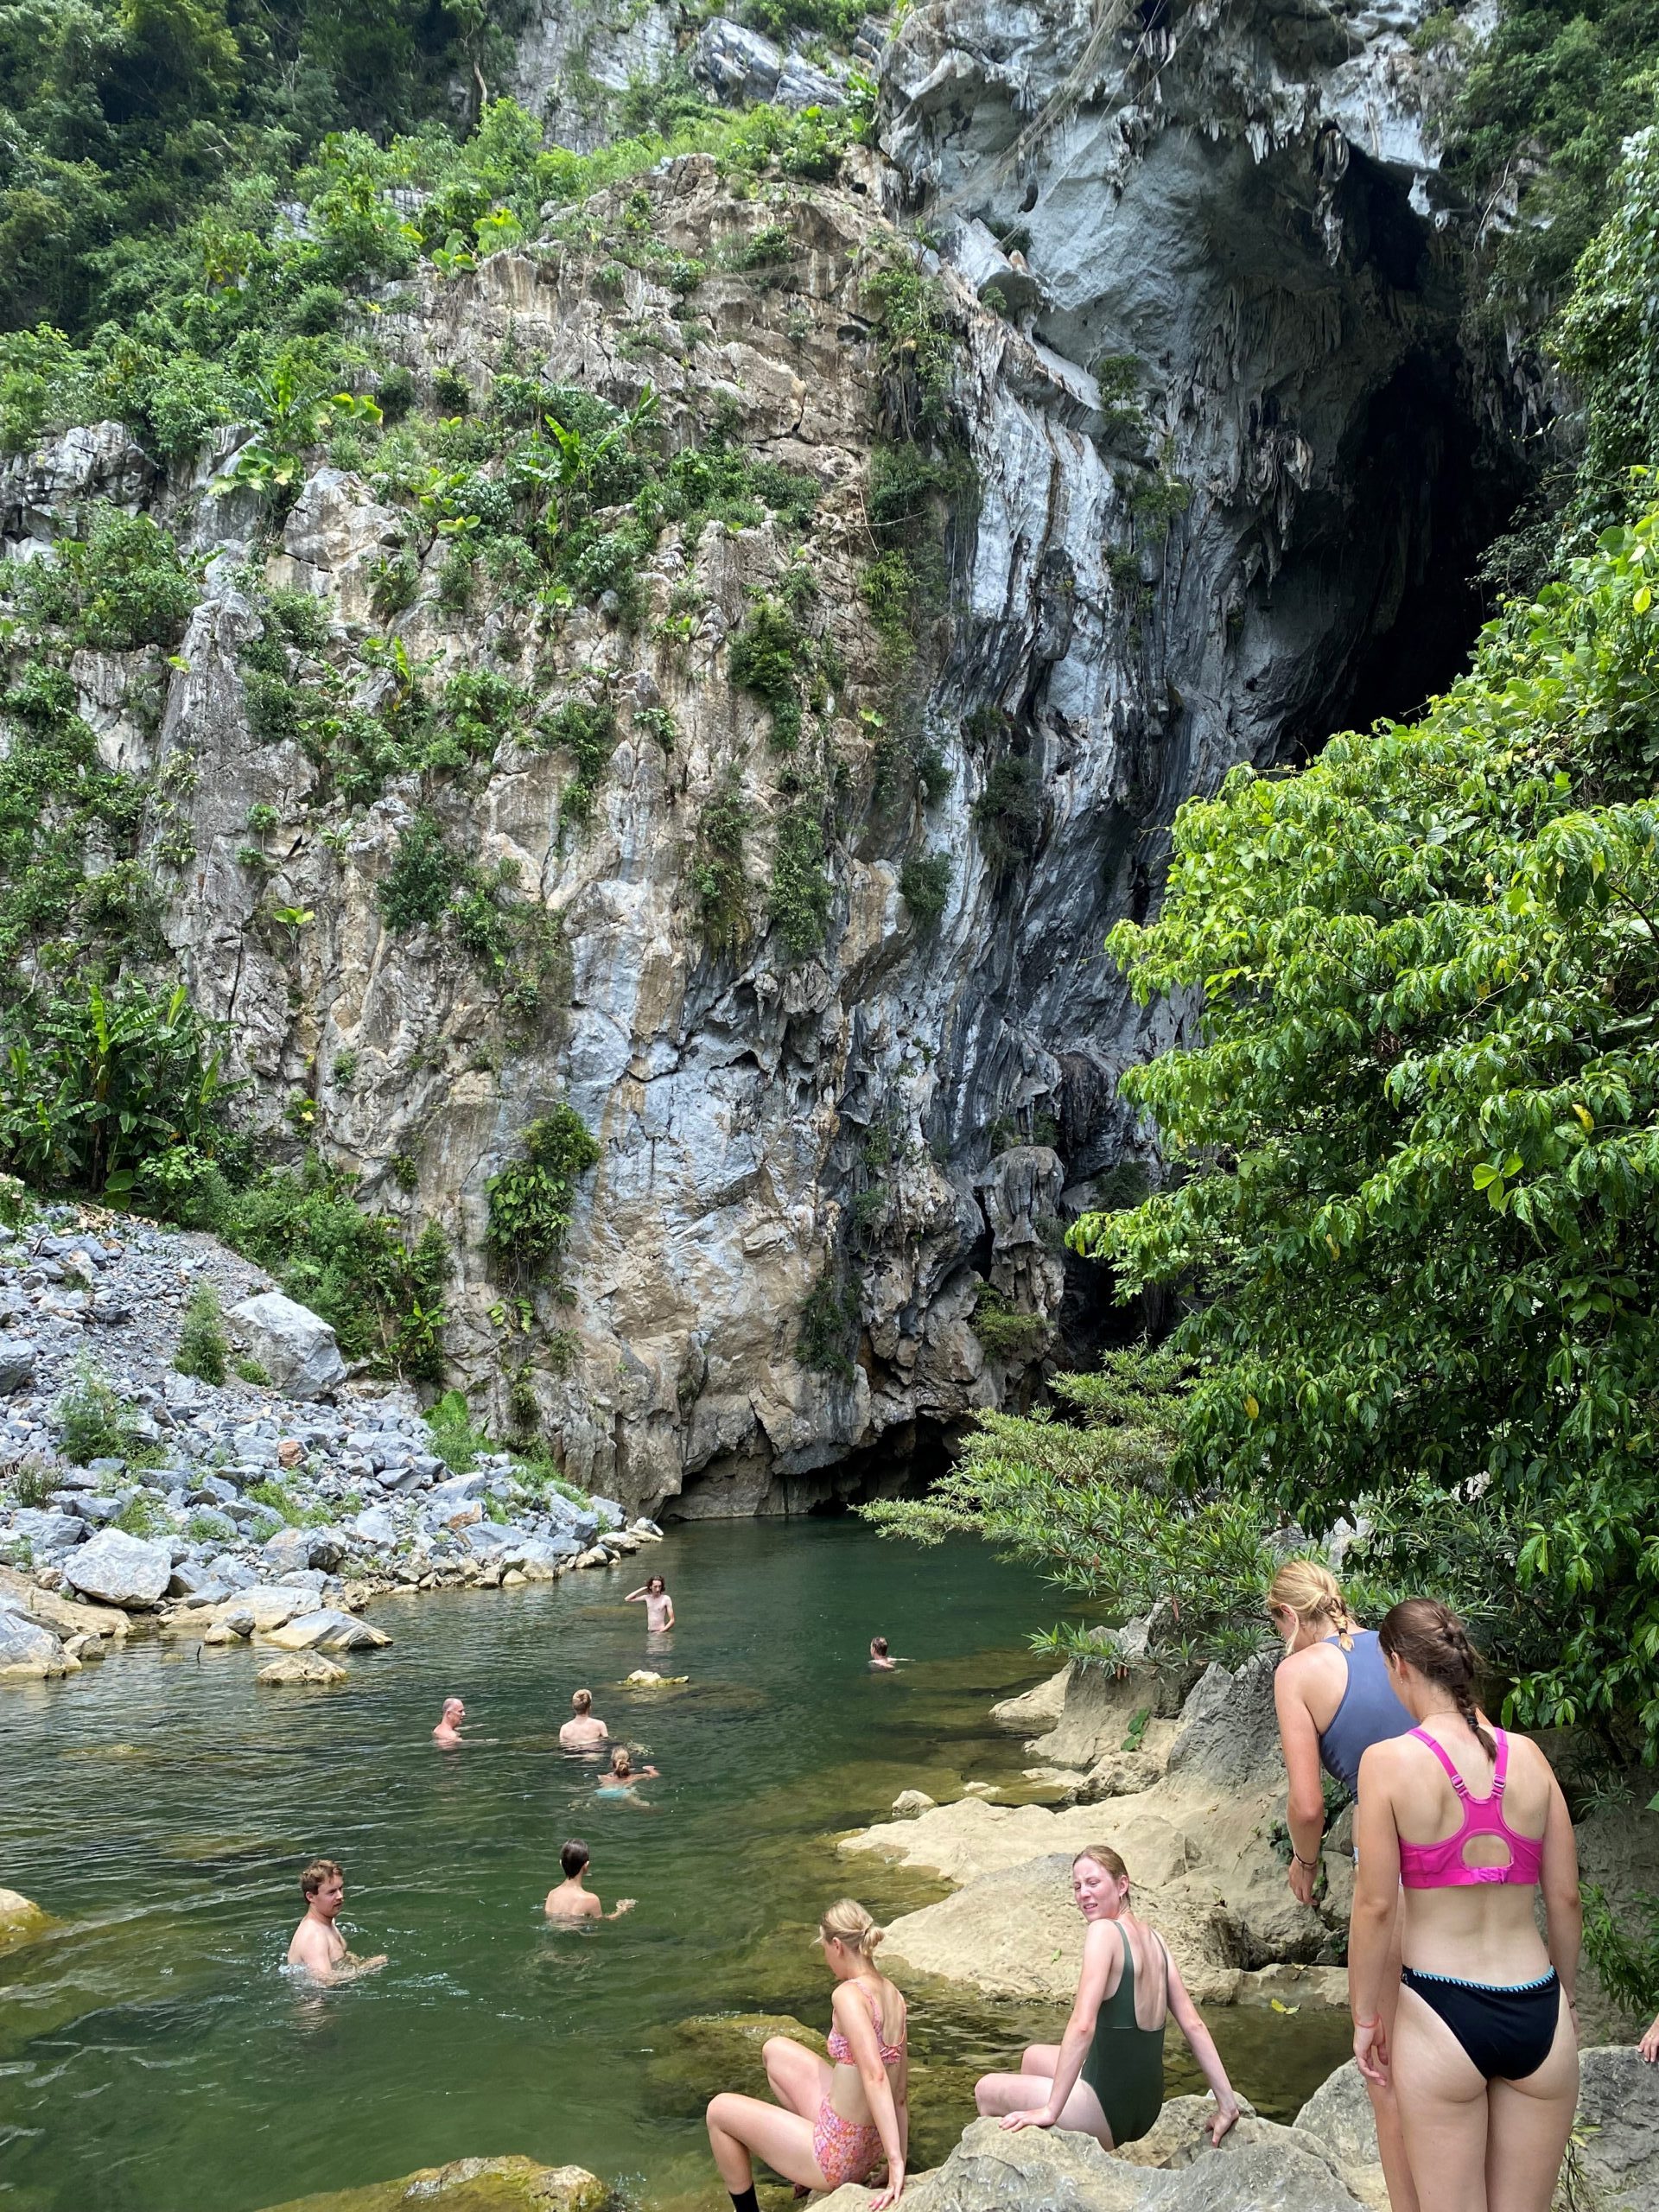 Phong Nha Cave